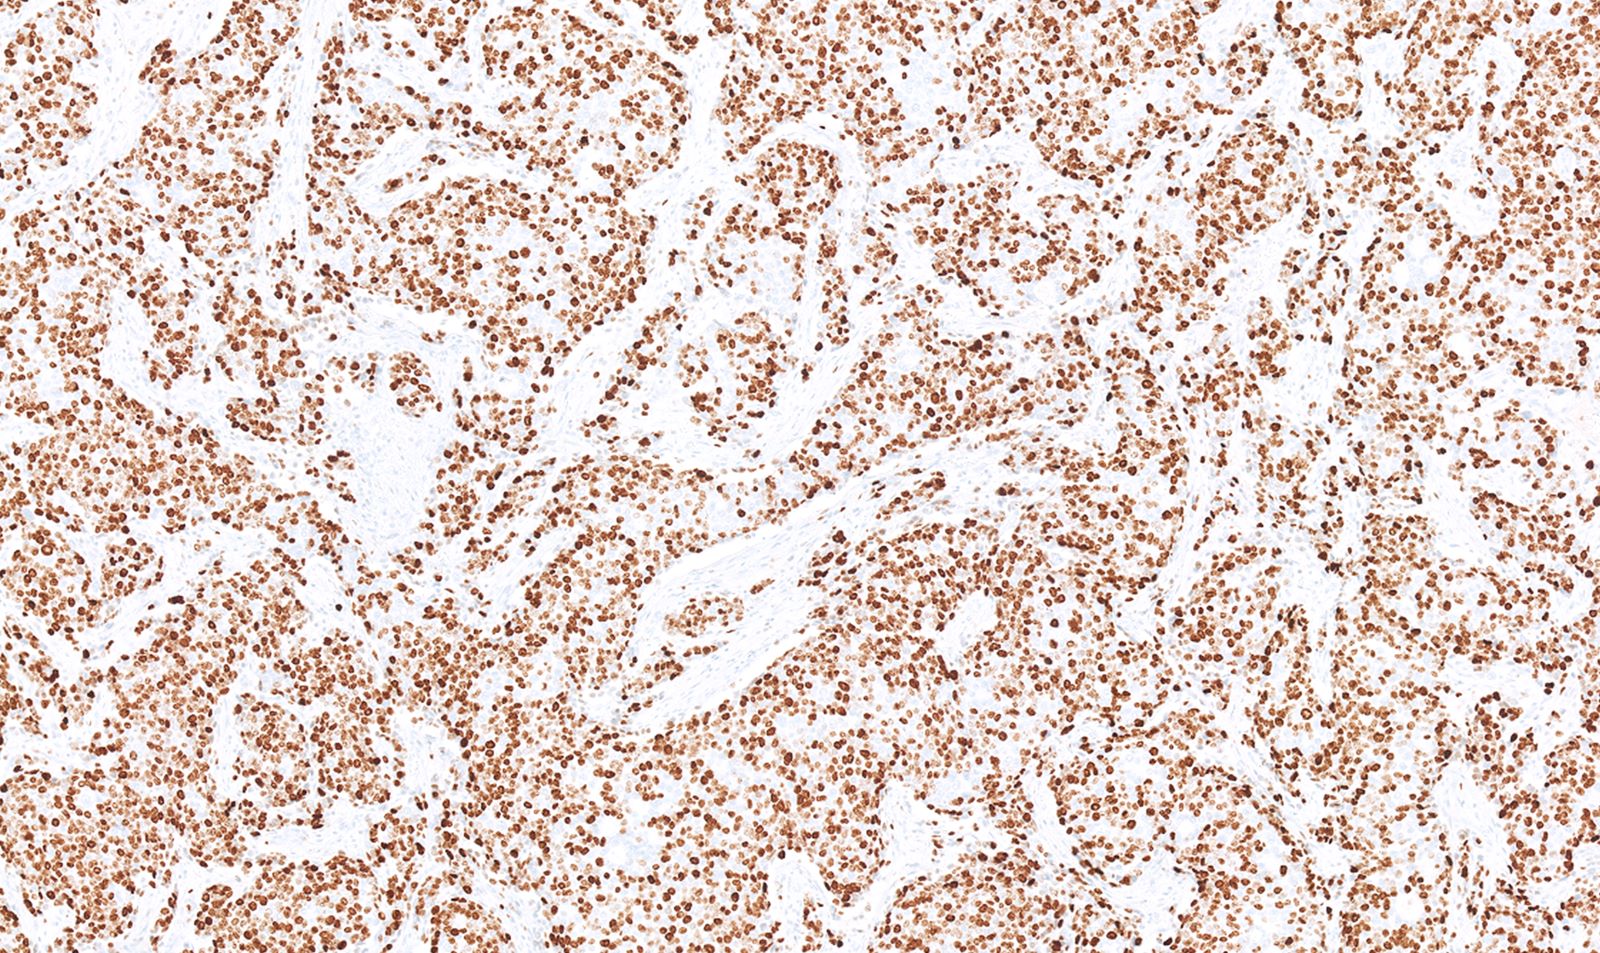  Ki67 neuroendocrine carcinoma component